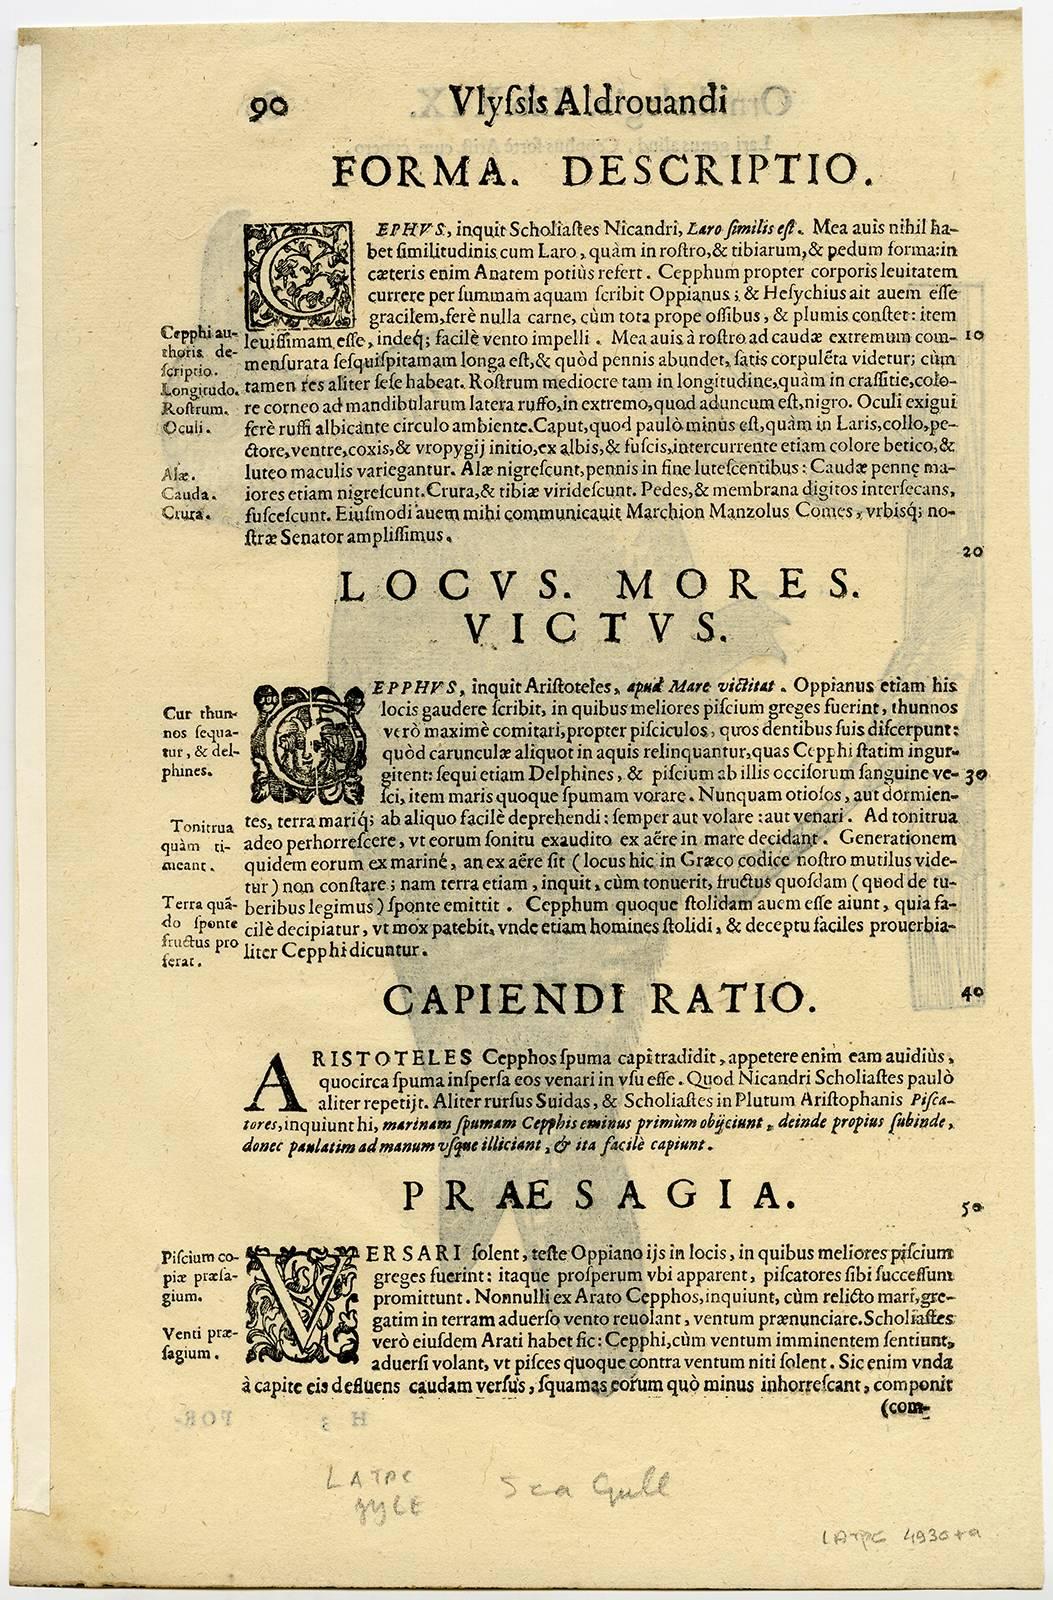 Lari genus aliud, [..]. - Print by Cristoforo Coriolano